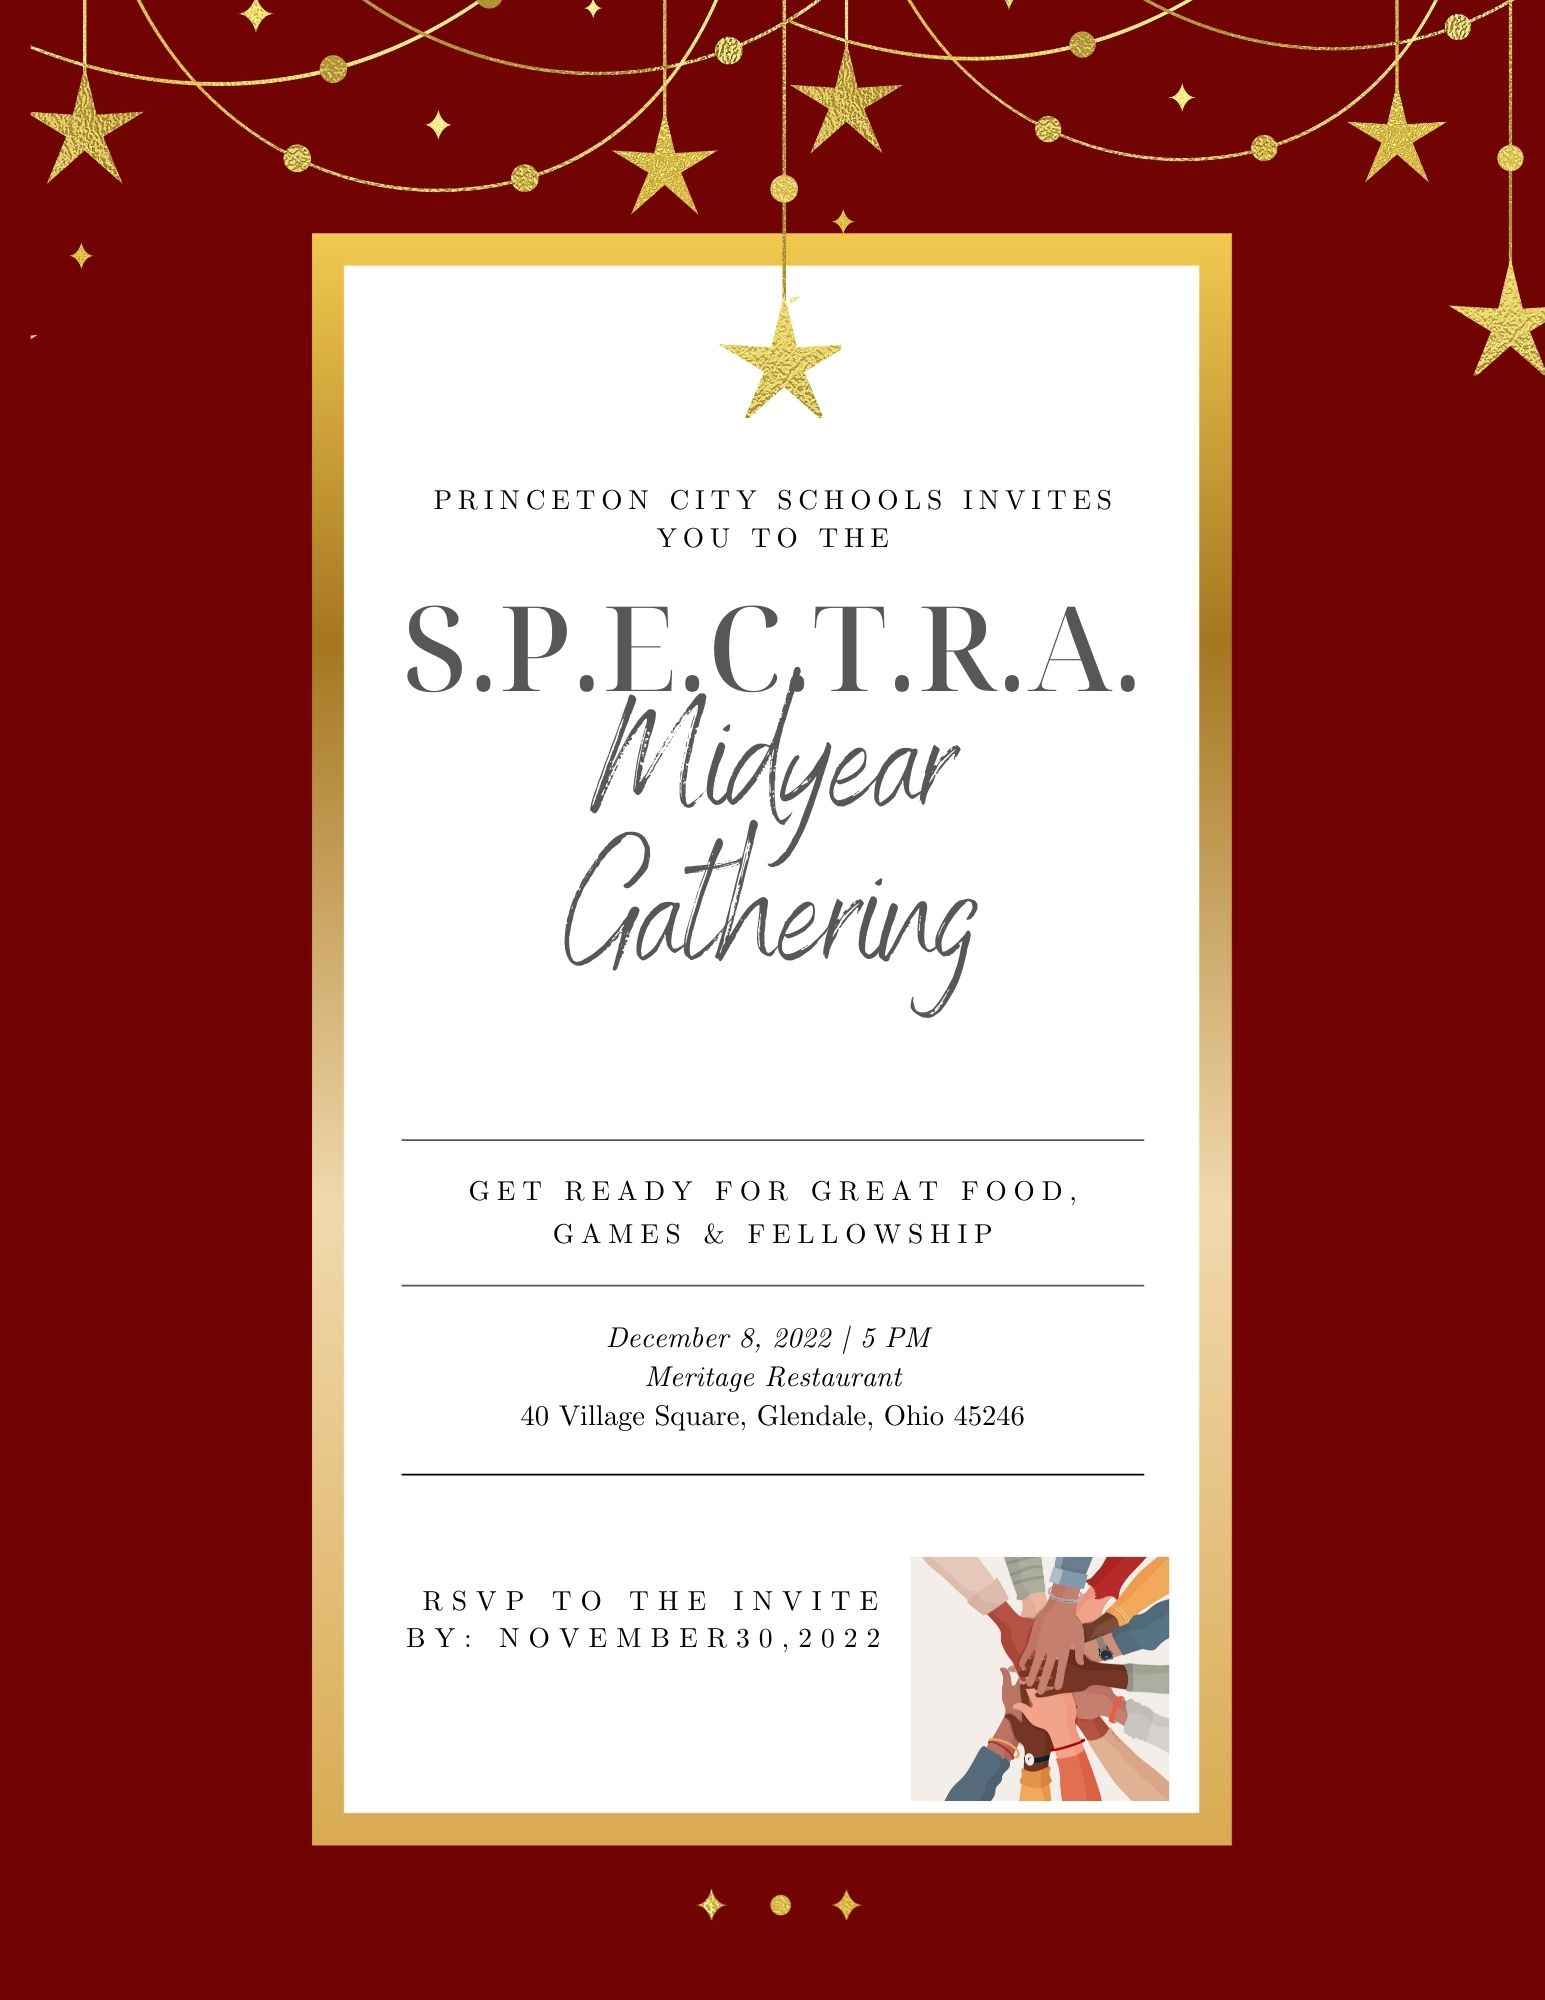 SPECTRA Midyear Gathering Invitation